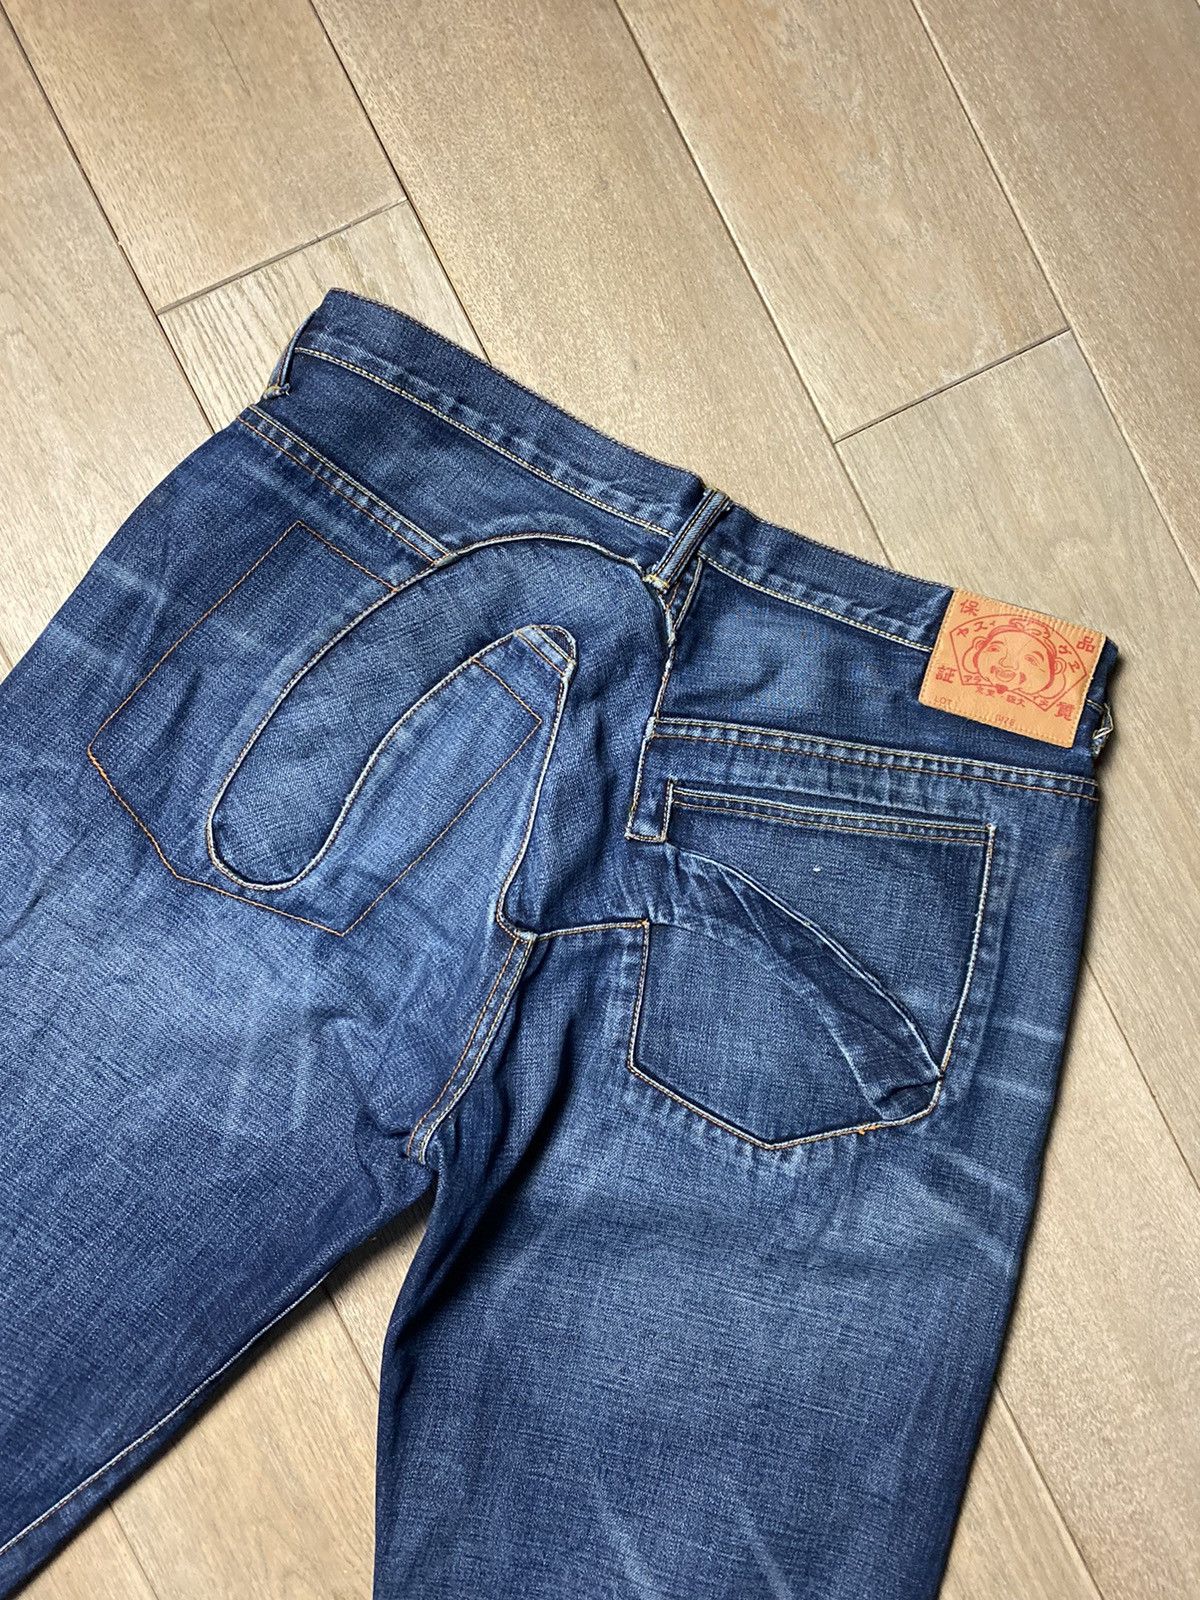 Vintage Evisu Japan vintage blue jeans denim pants big seagull logo Size US 38 / EU 54 - 2 Preview